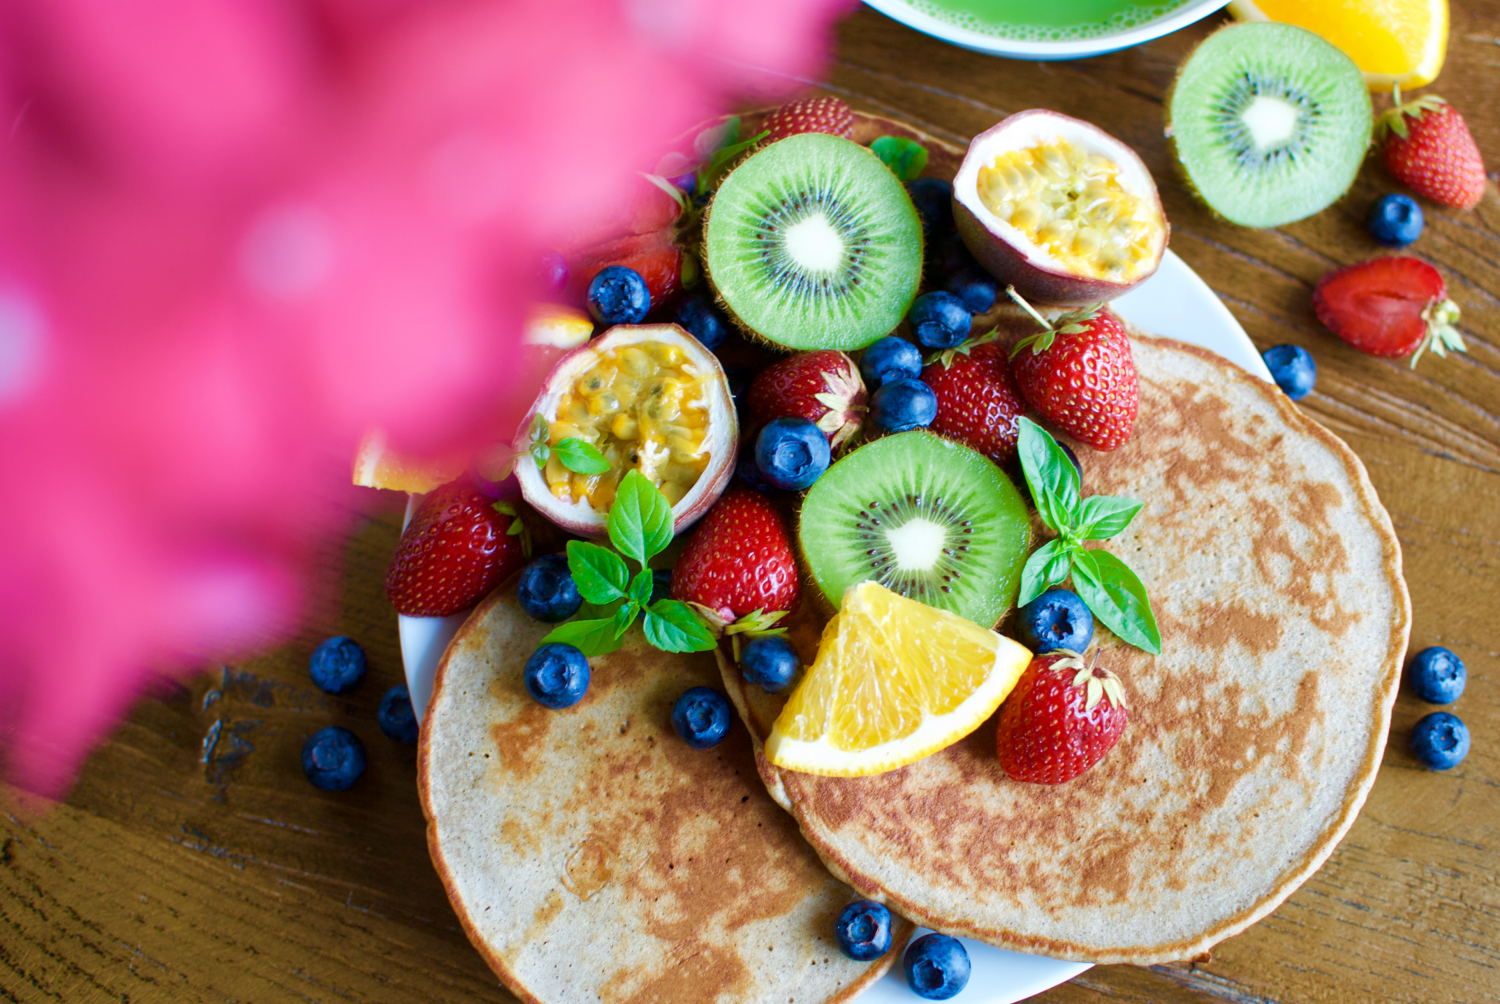 Healthified buckwheat pancakes (banana-free)